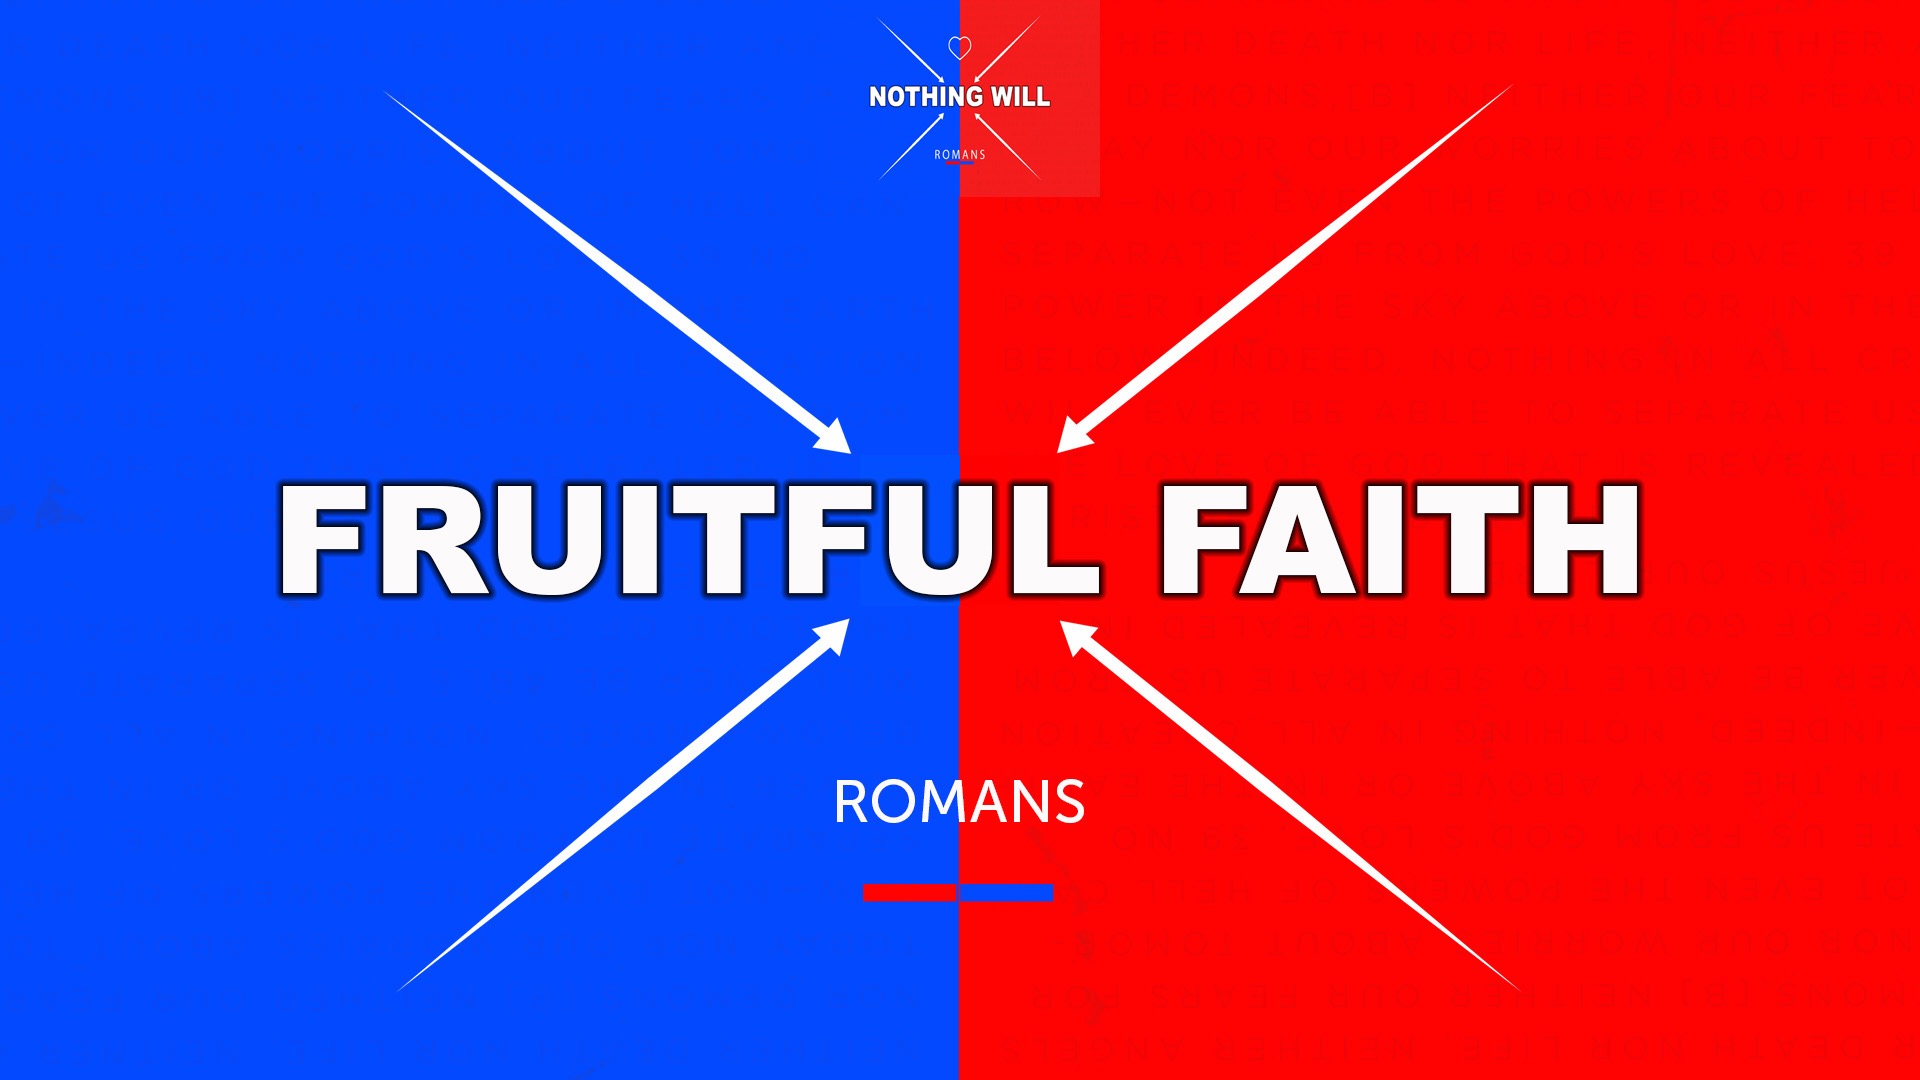 Pastor Jasper: Romans | Nothing Will | Fruitful Faith (02/28/16)